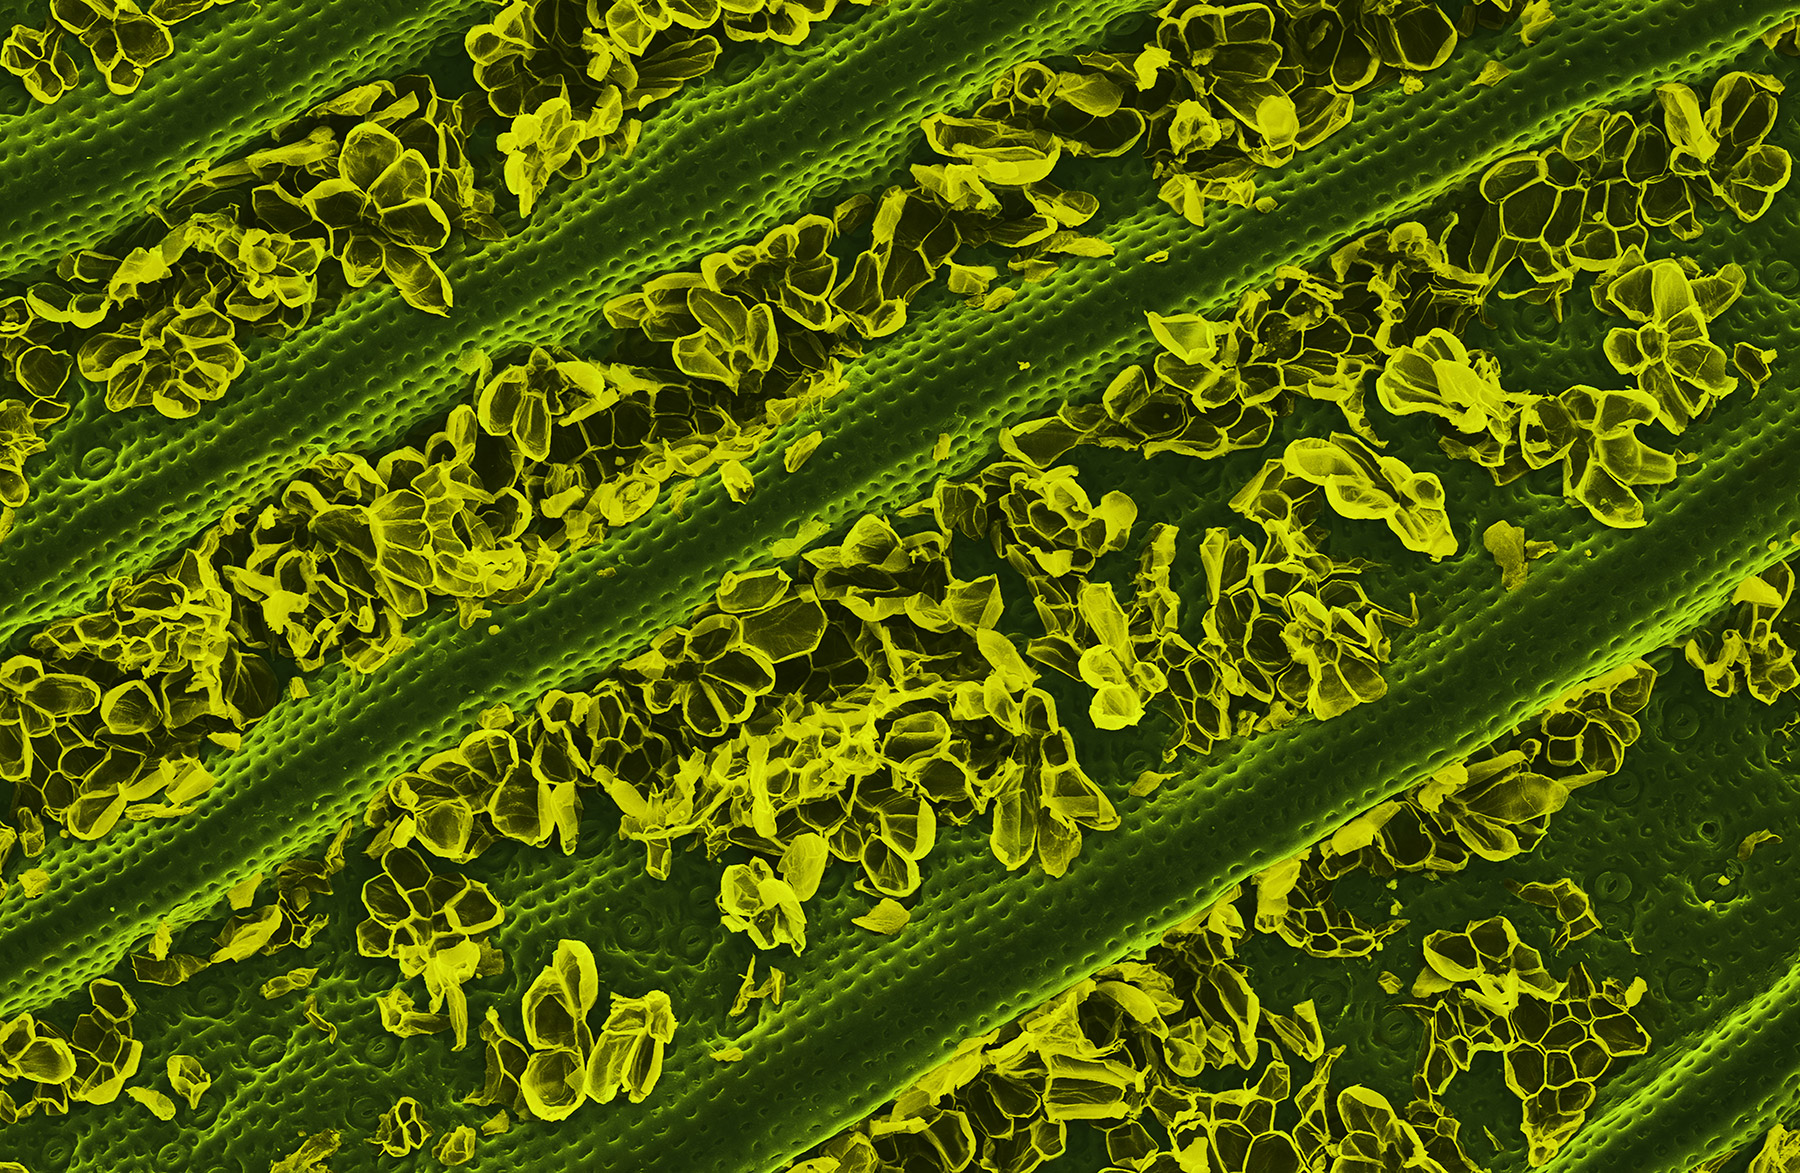  terra cibus no.33: pineapple leaf  85x magnification 